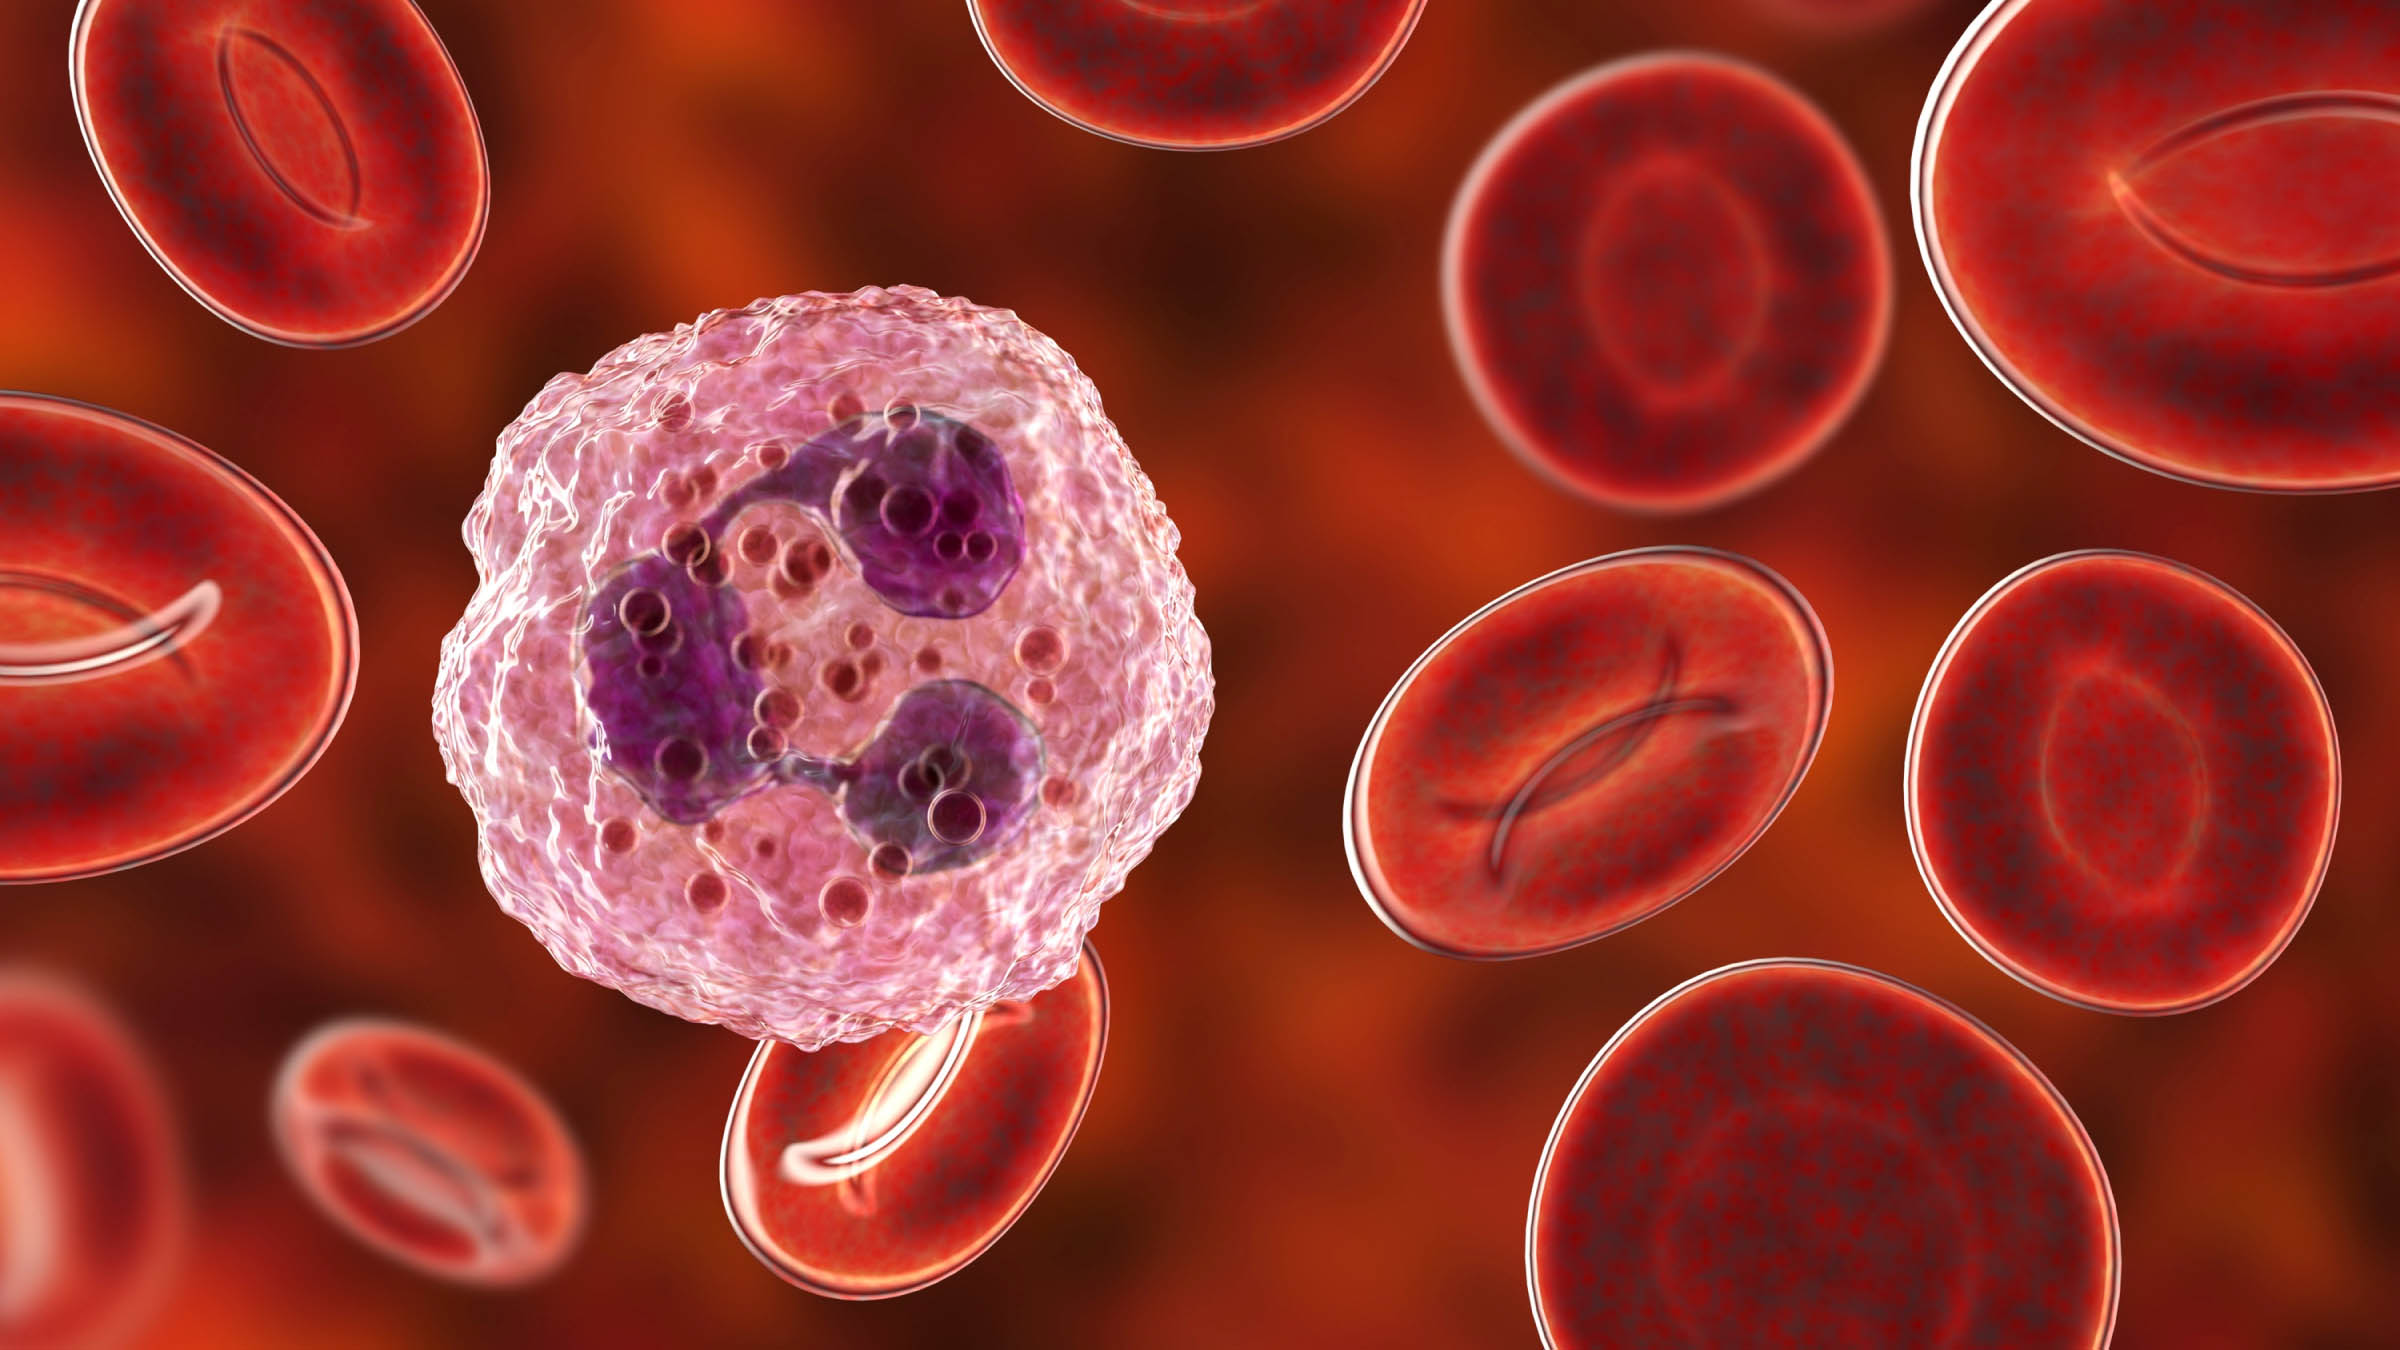 Illustration of Red Blood Cells